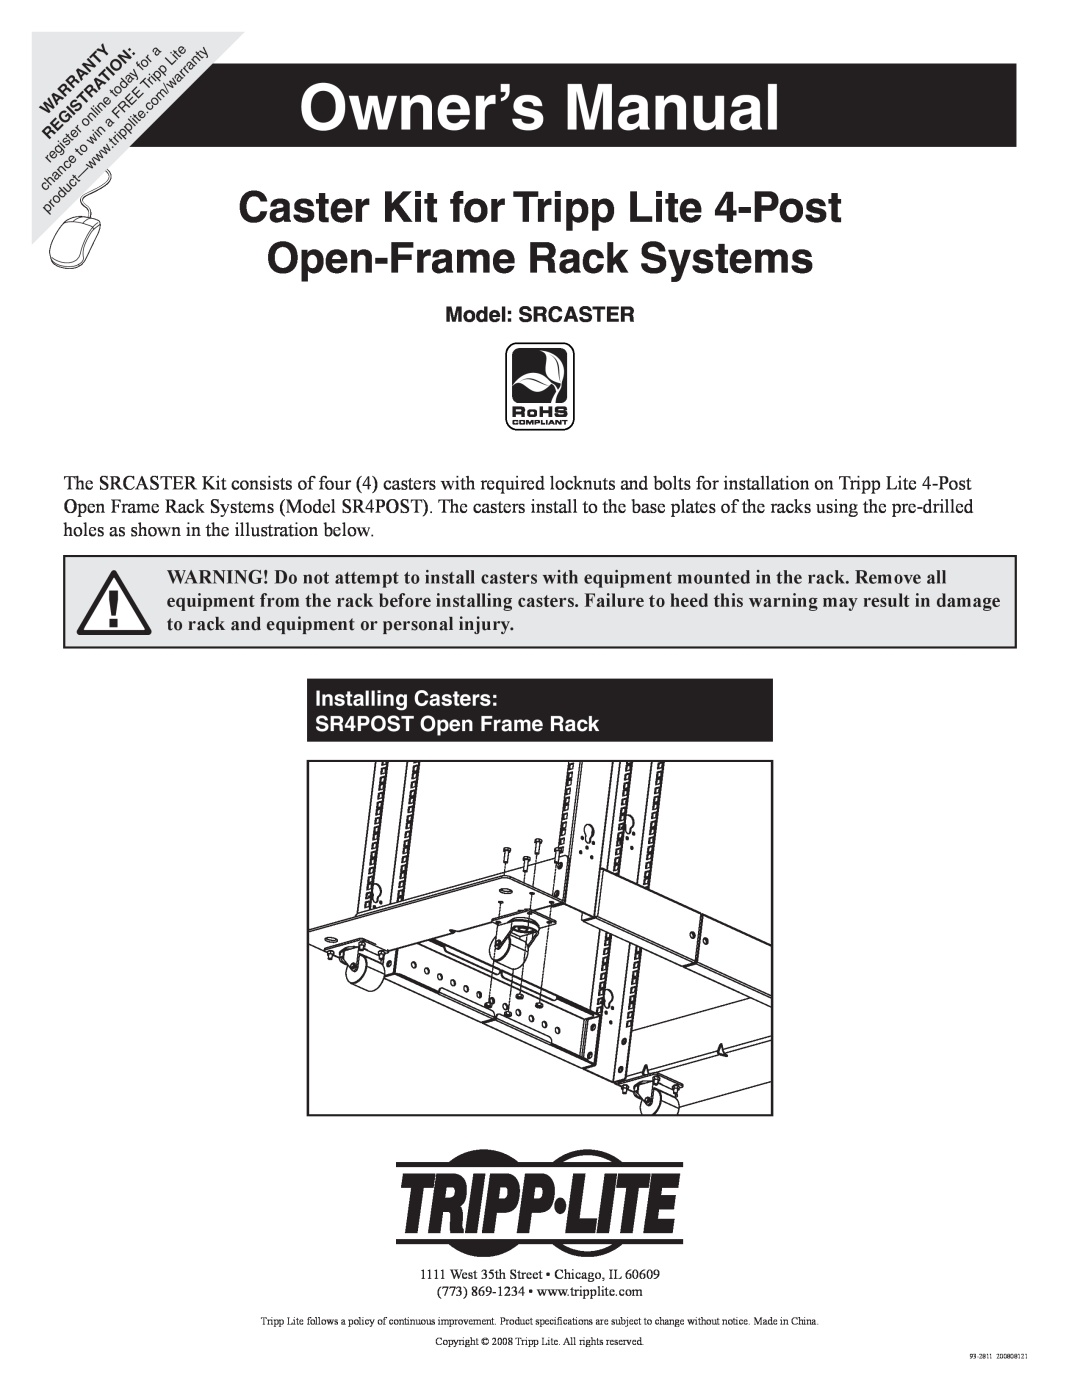 Tripp Lite owner manual Model: SRCASTER, Installing Casters SR4POST Open Frame Rack, West 35th Street Chicago, IL 